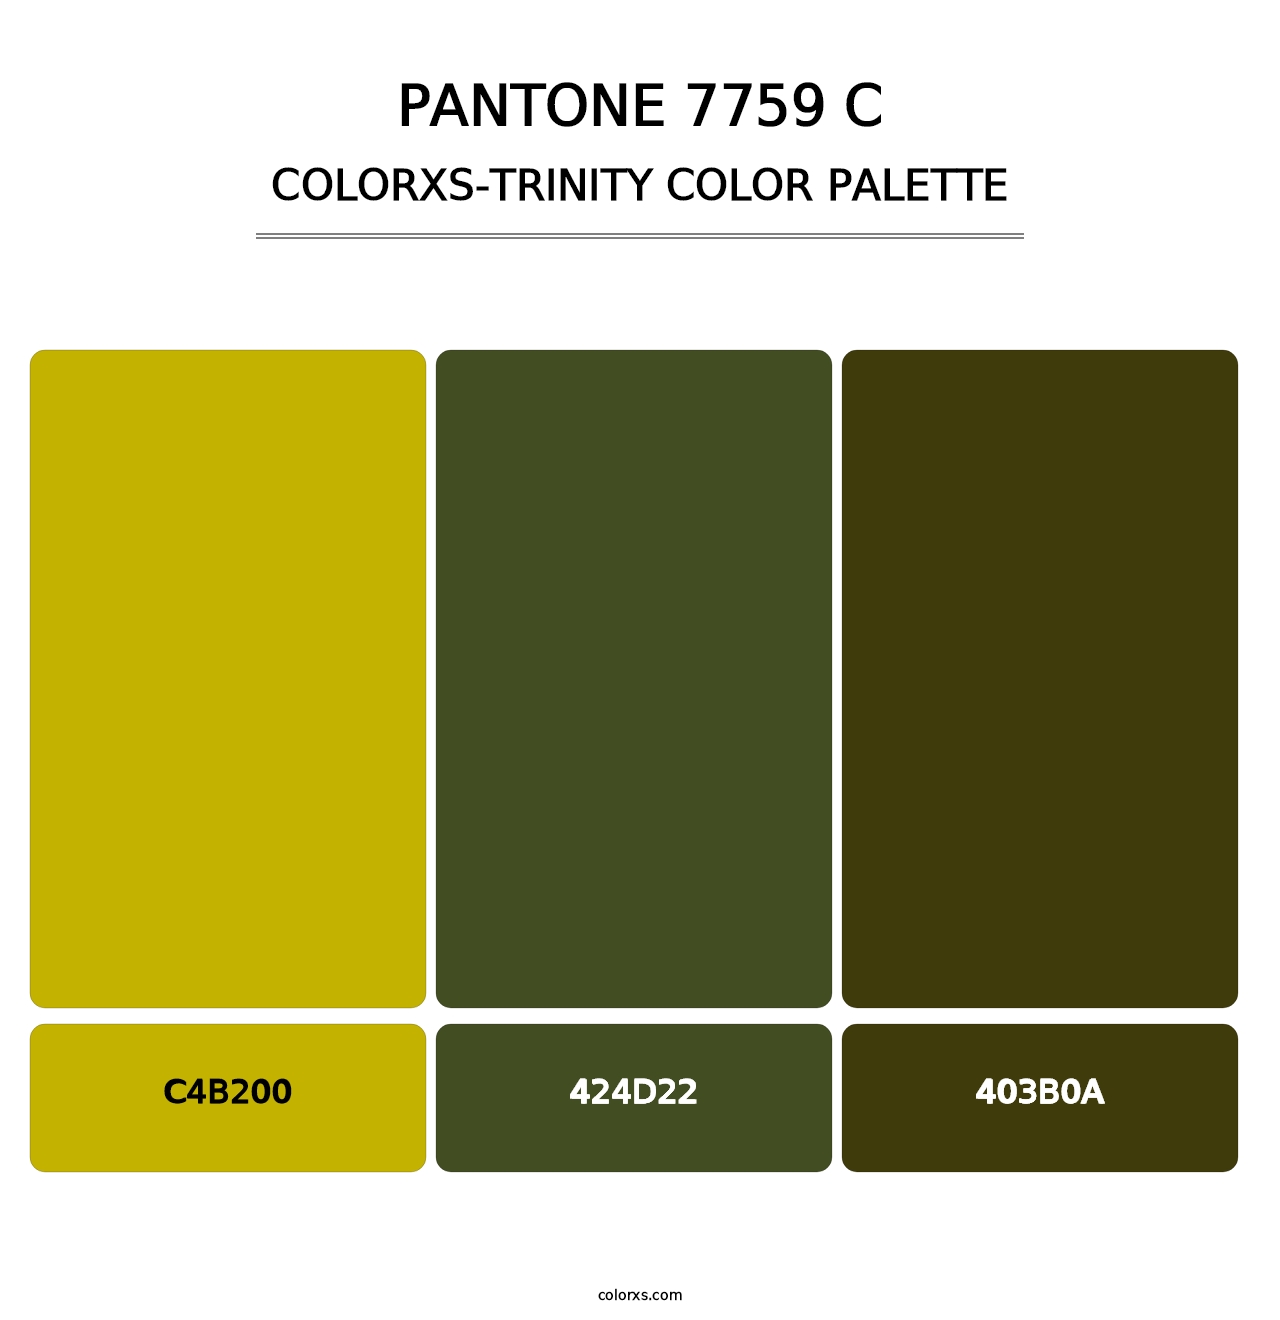 PANTONE 7759 C - Colorxs Trinity Palette